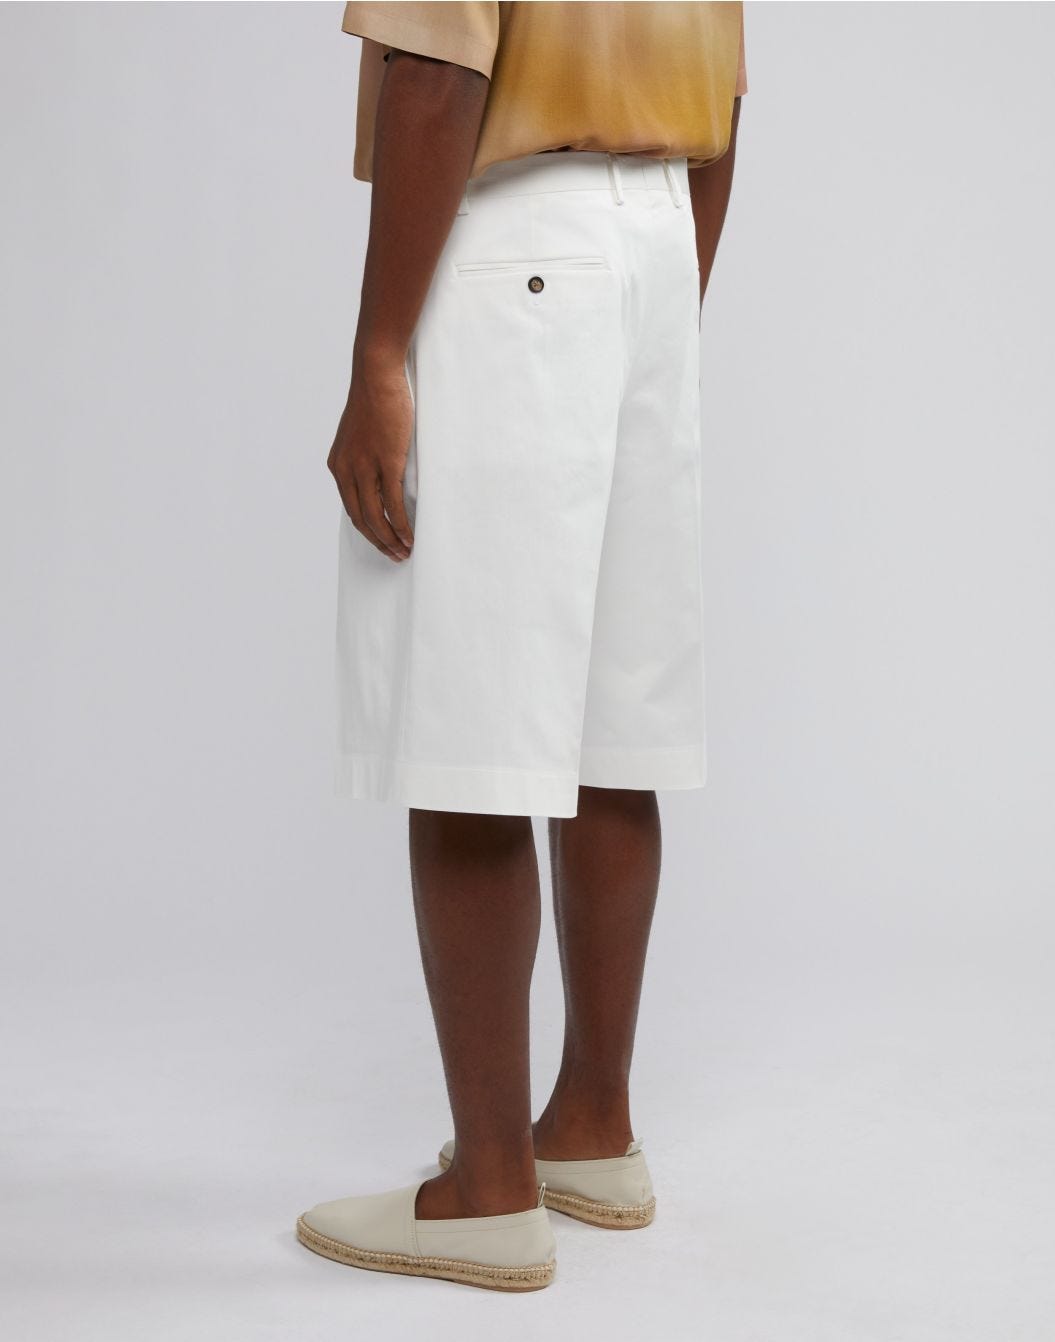 White stretch satin cotton comfortable short Bermuda shorts